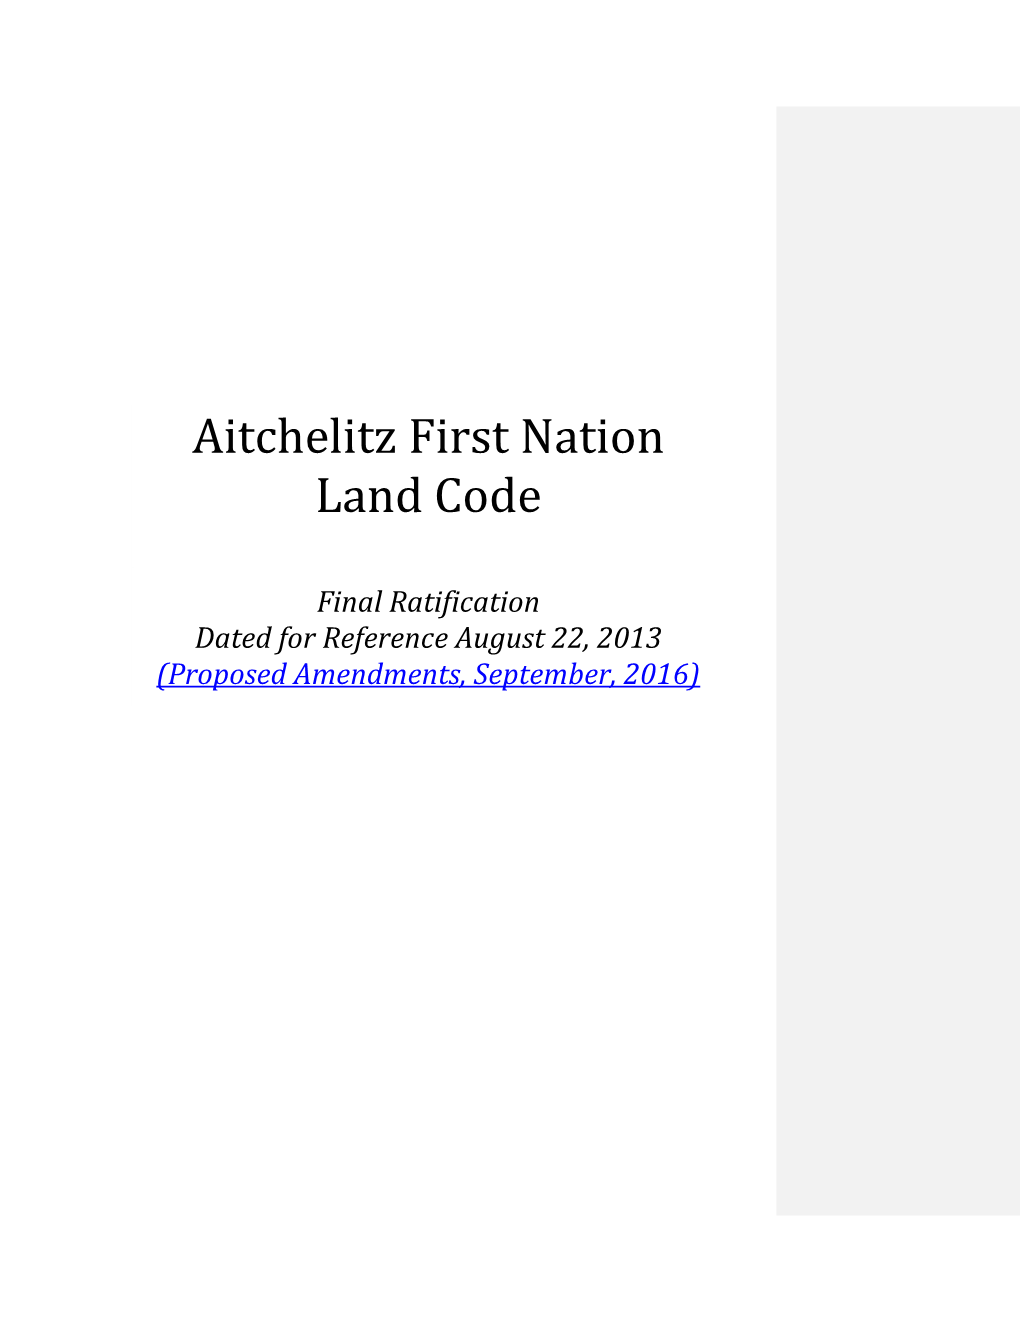 Aitchelitz First Nation Land Code